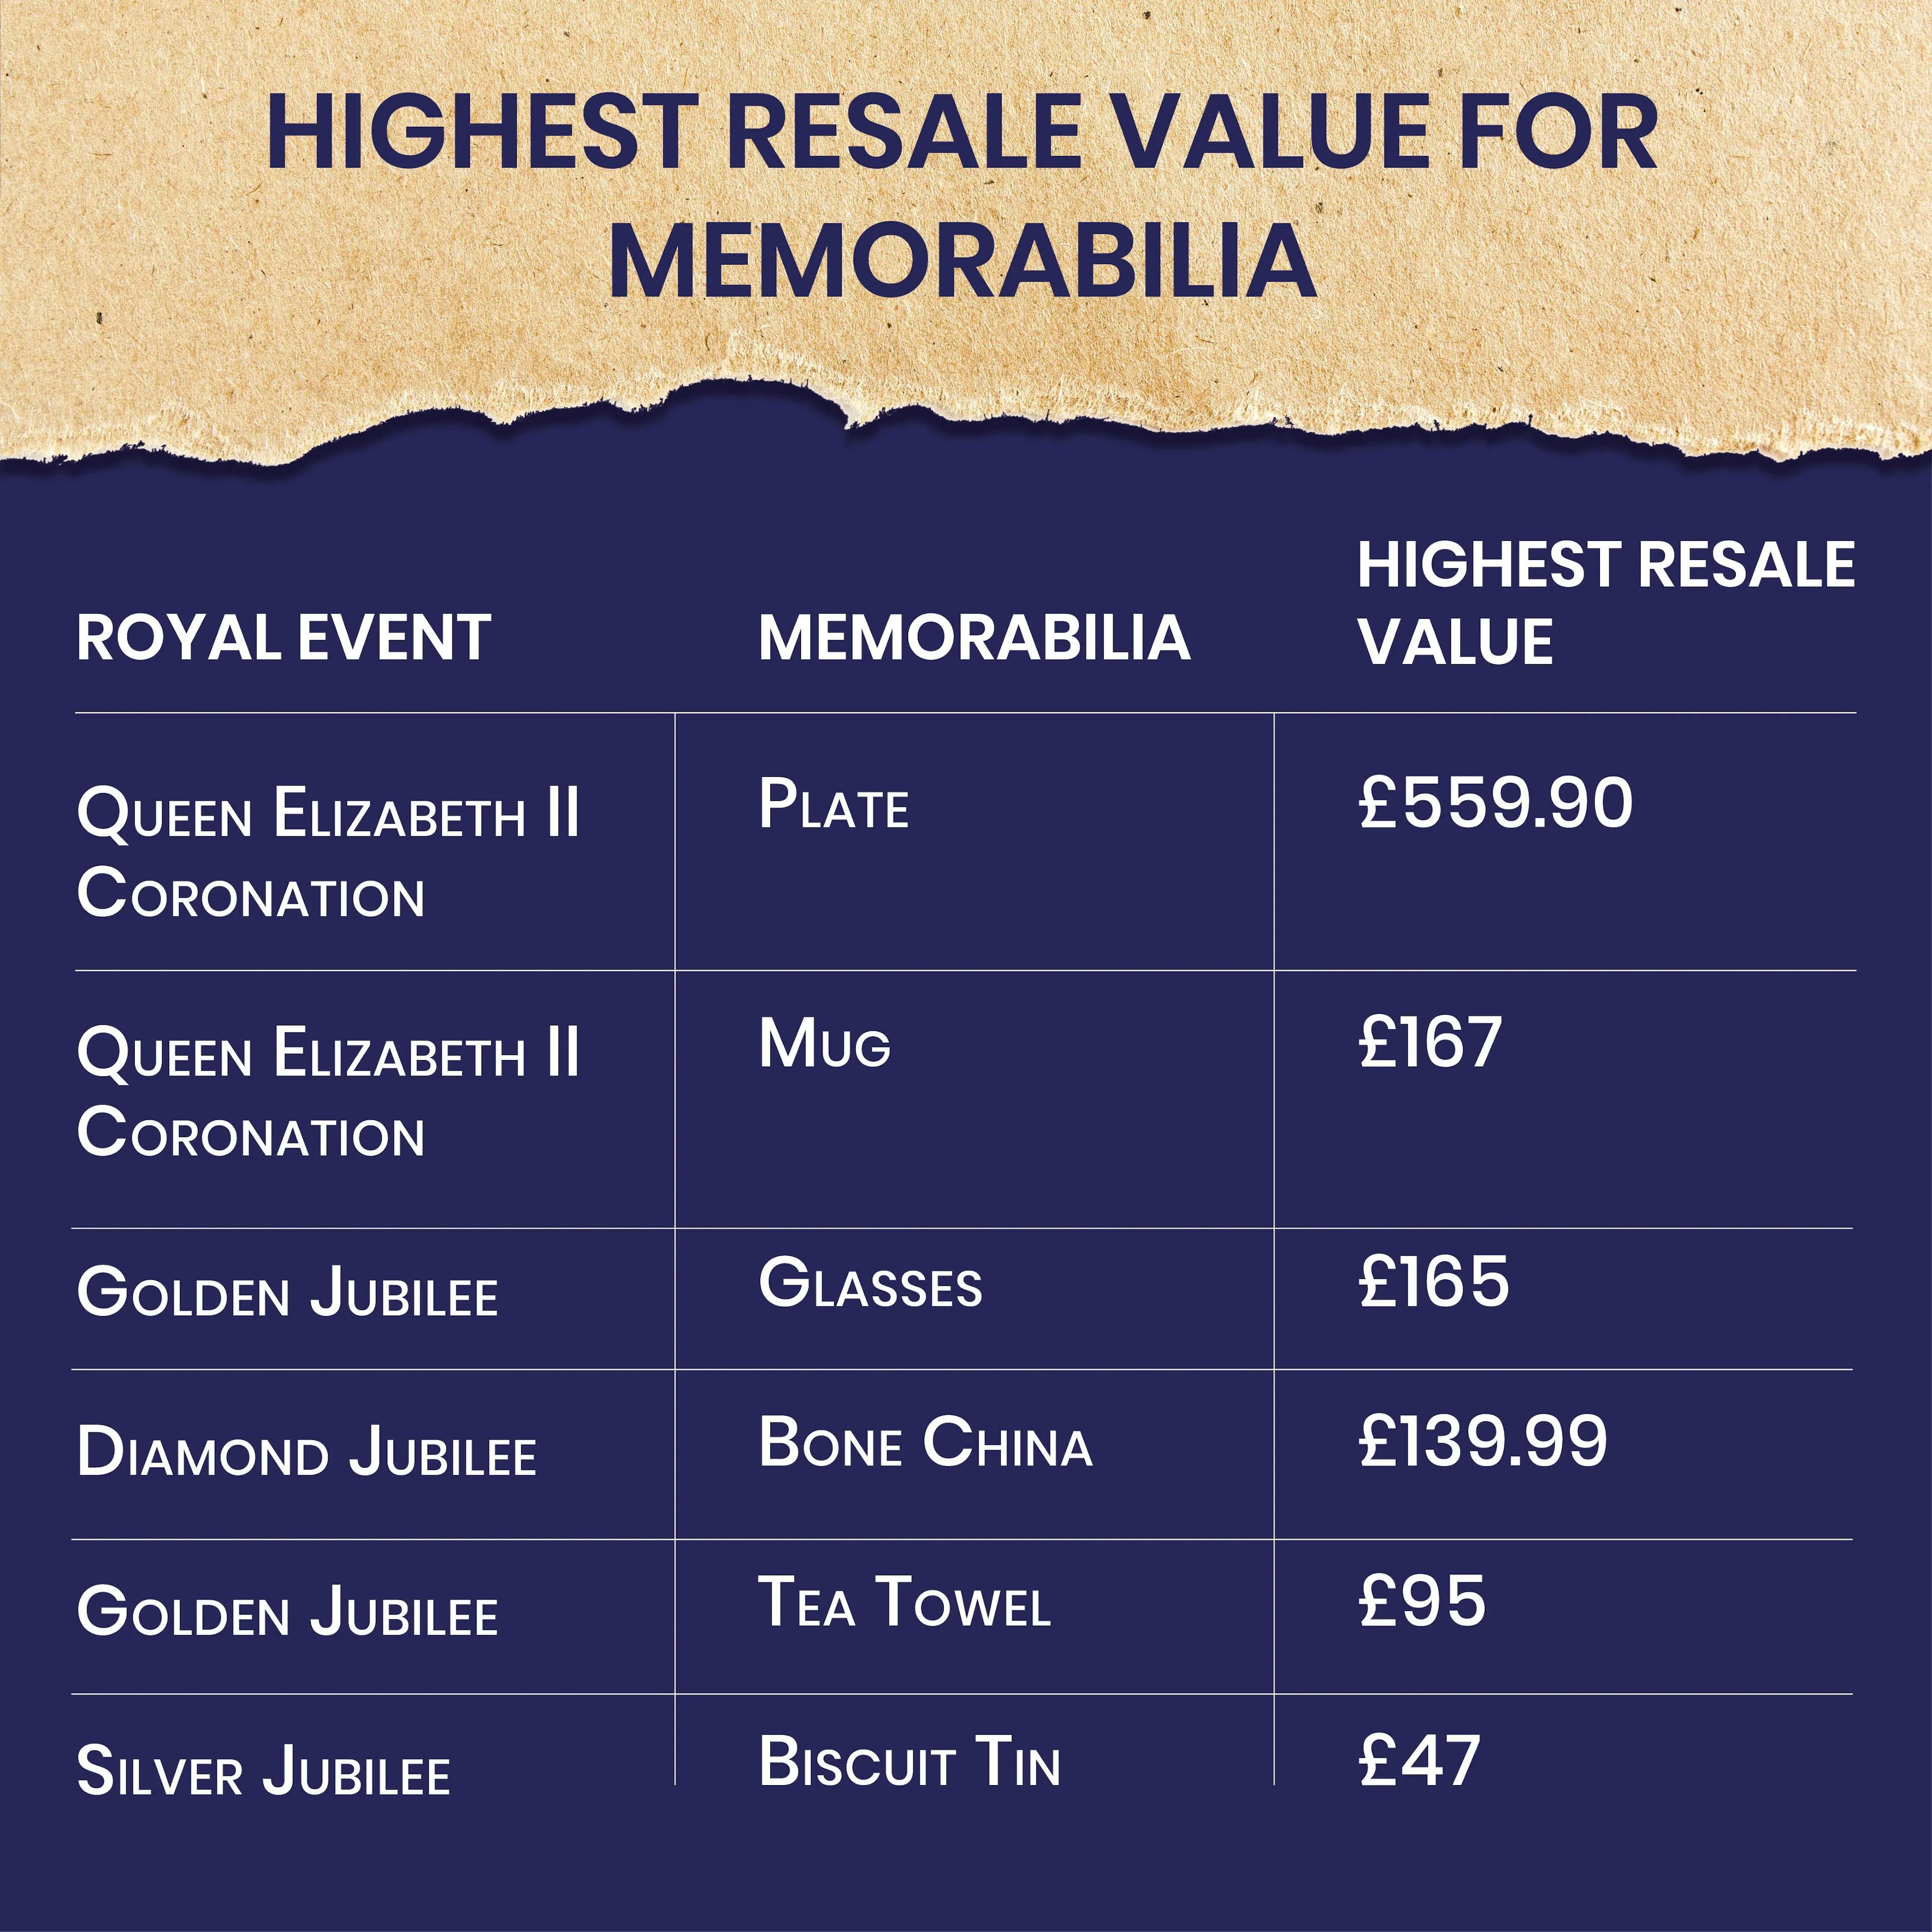 Highest resale value for Memorabilia